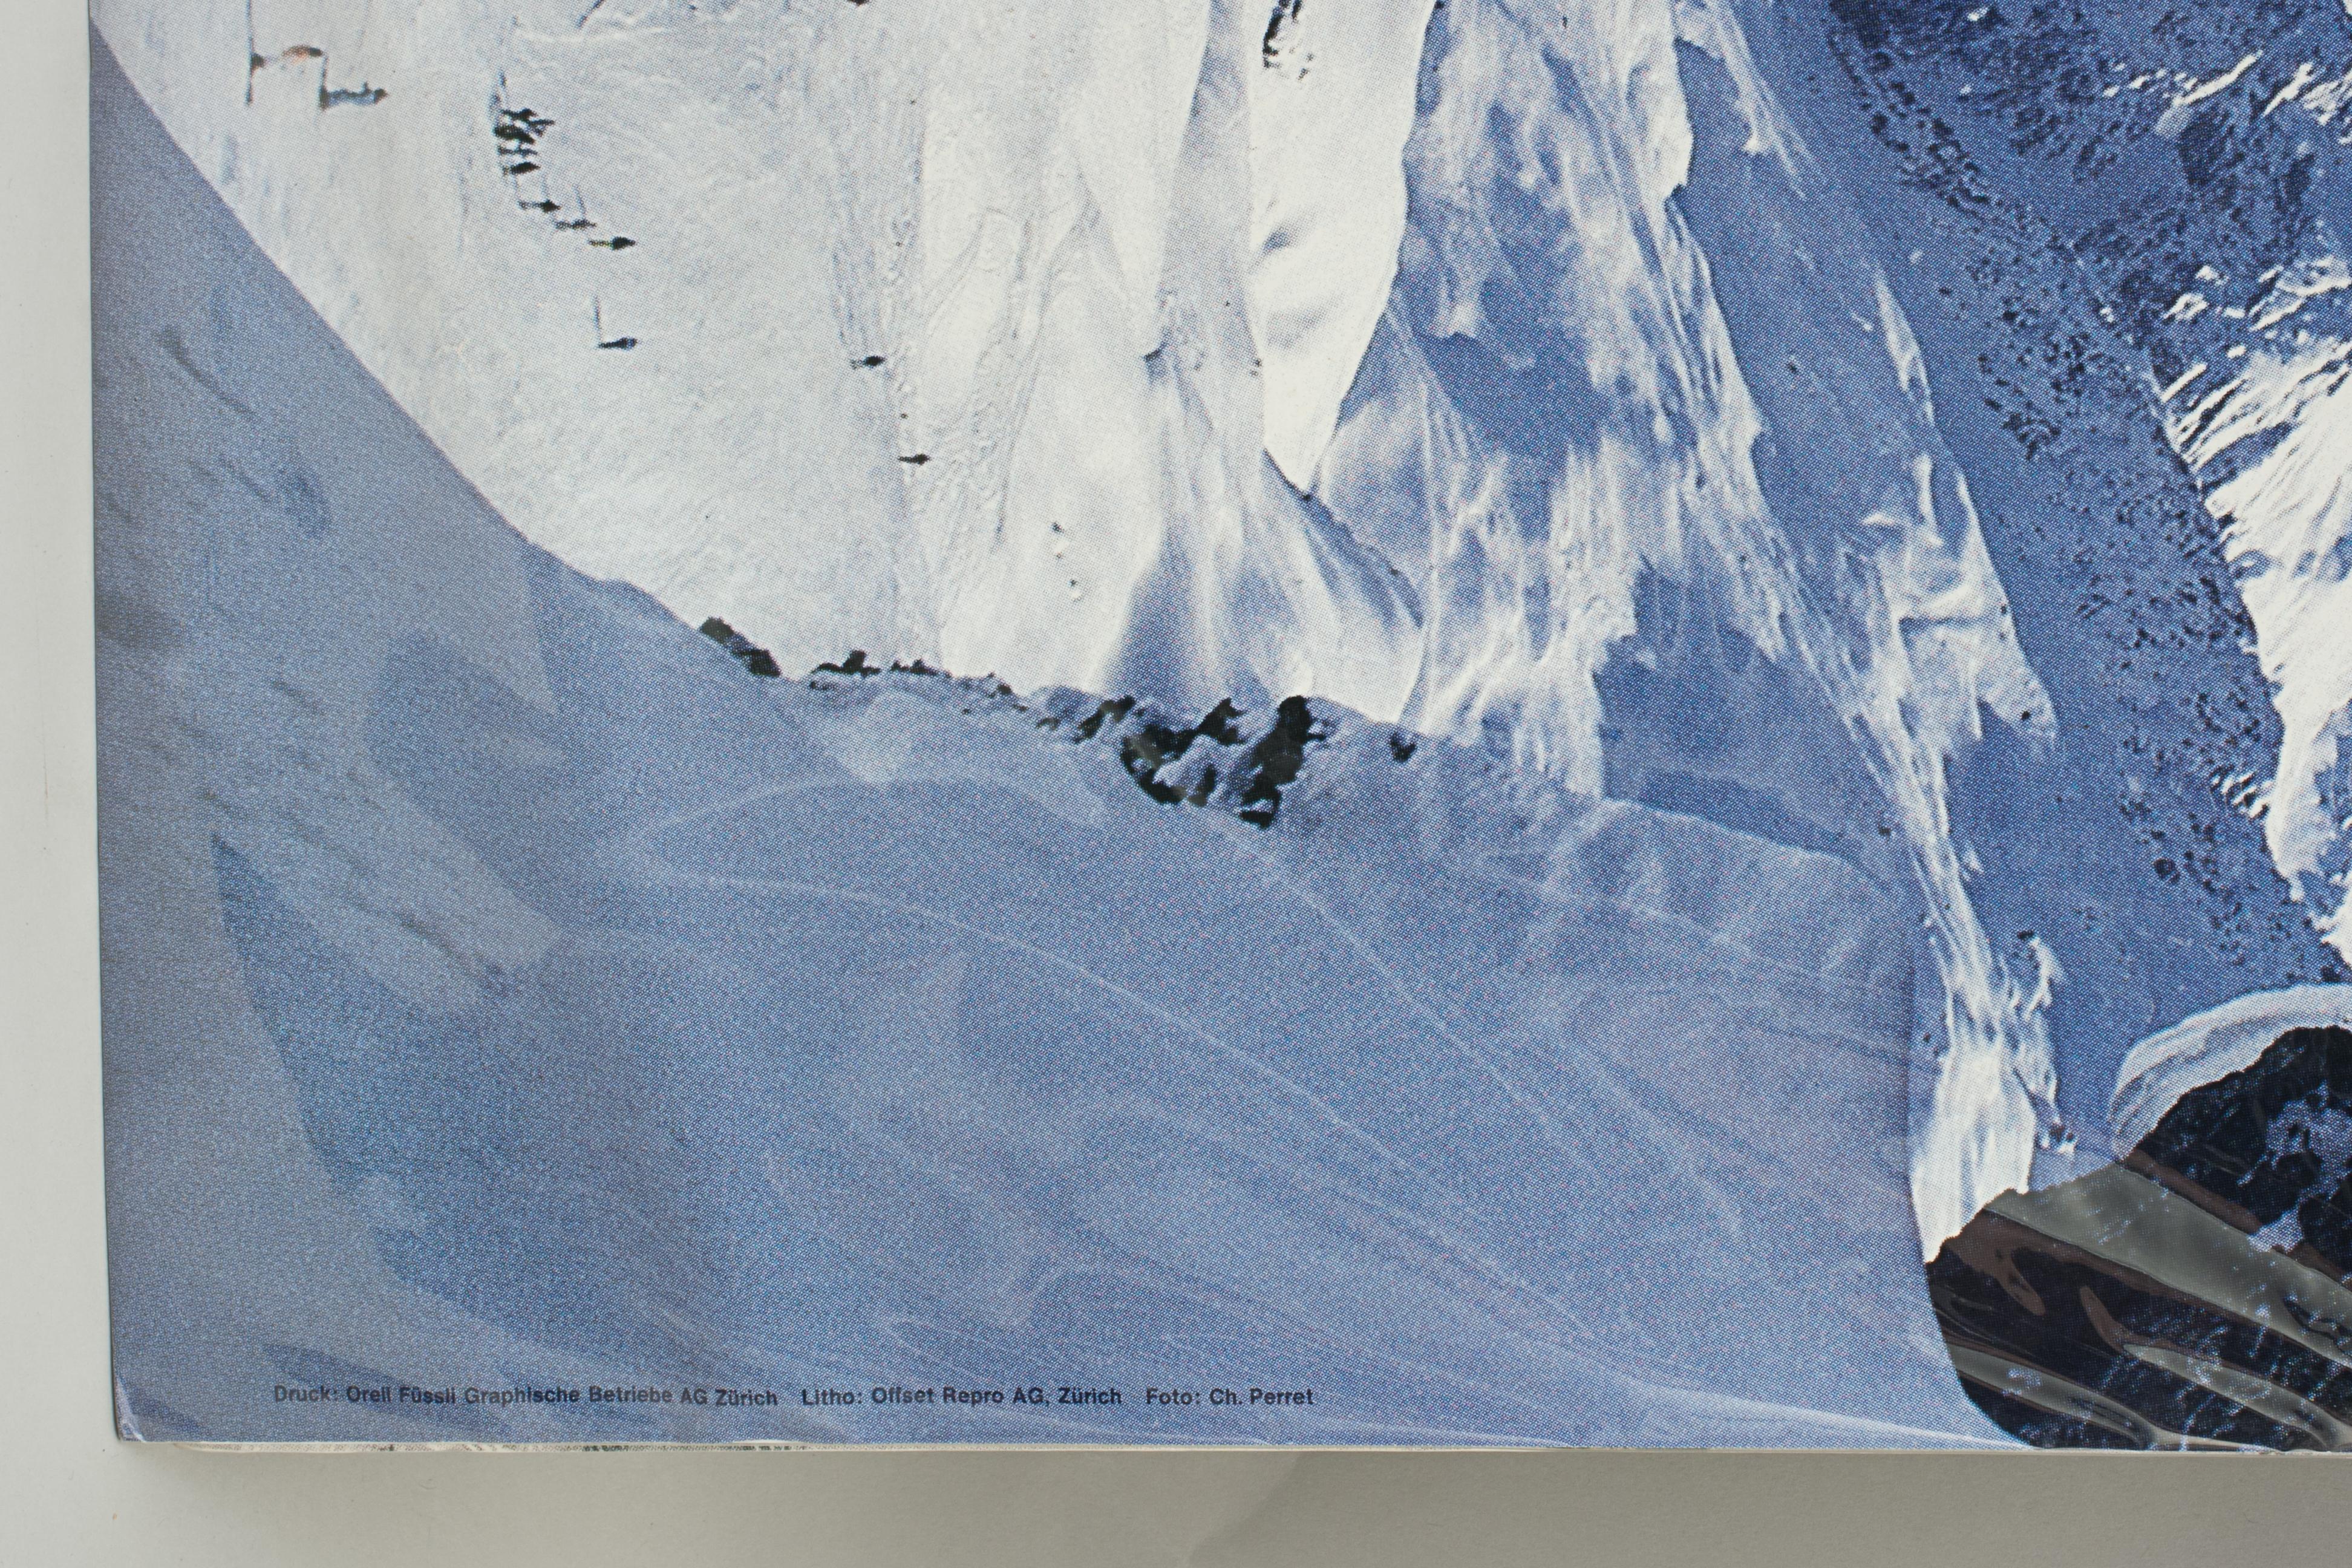 Late 20th Century Vintage Travel Ski Poster, Arosa, Switzerland